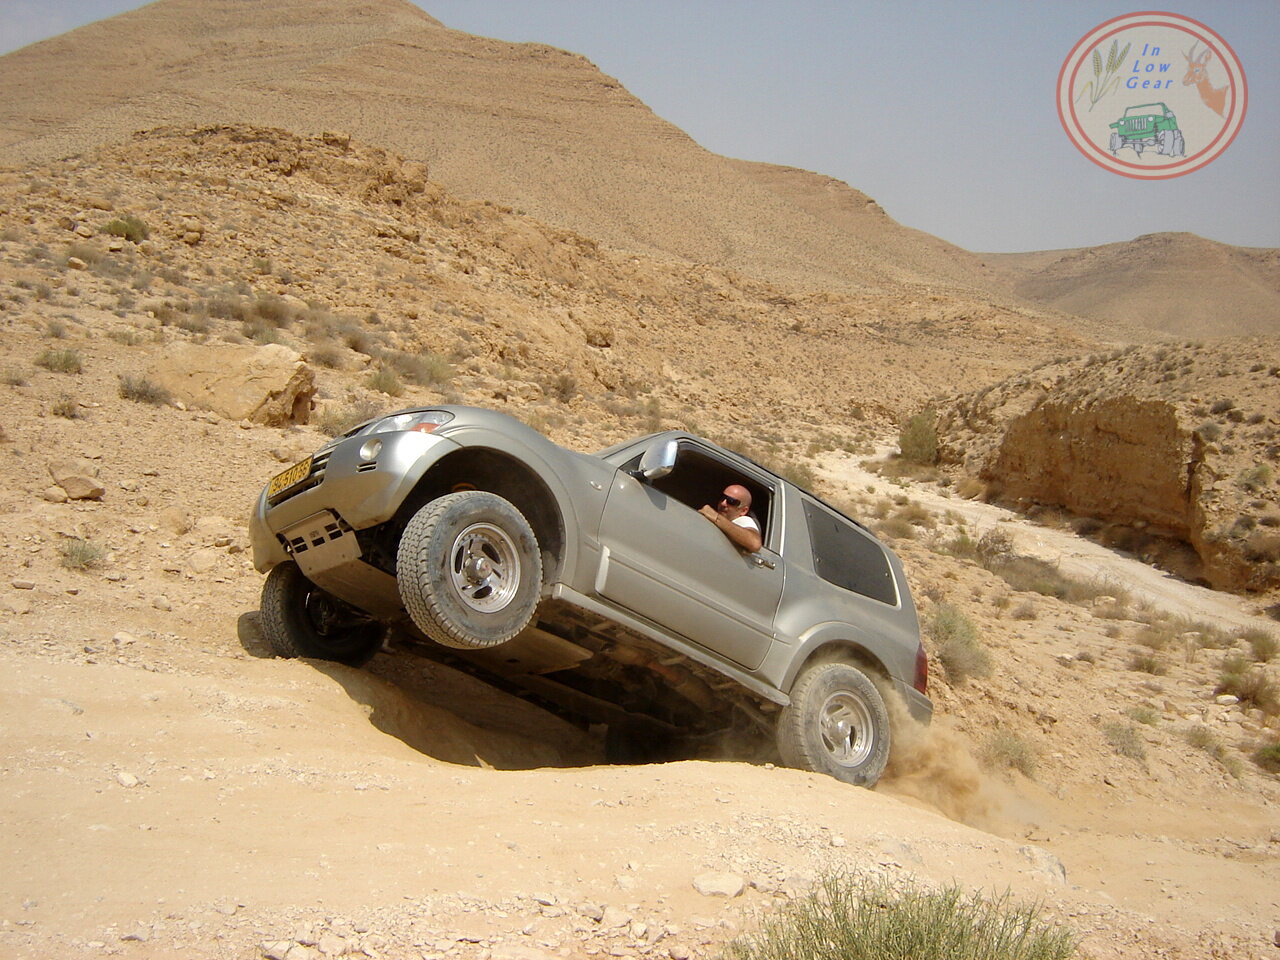 S. Nahal Elot adventure jeep tour נחל אלות טיולי ג'יפים